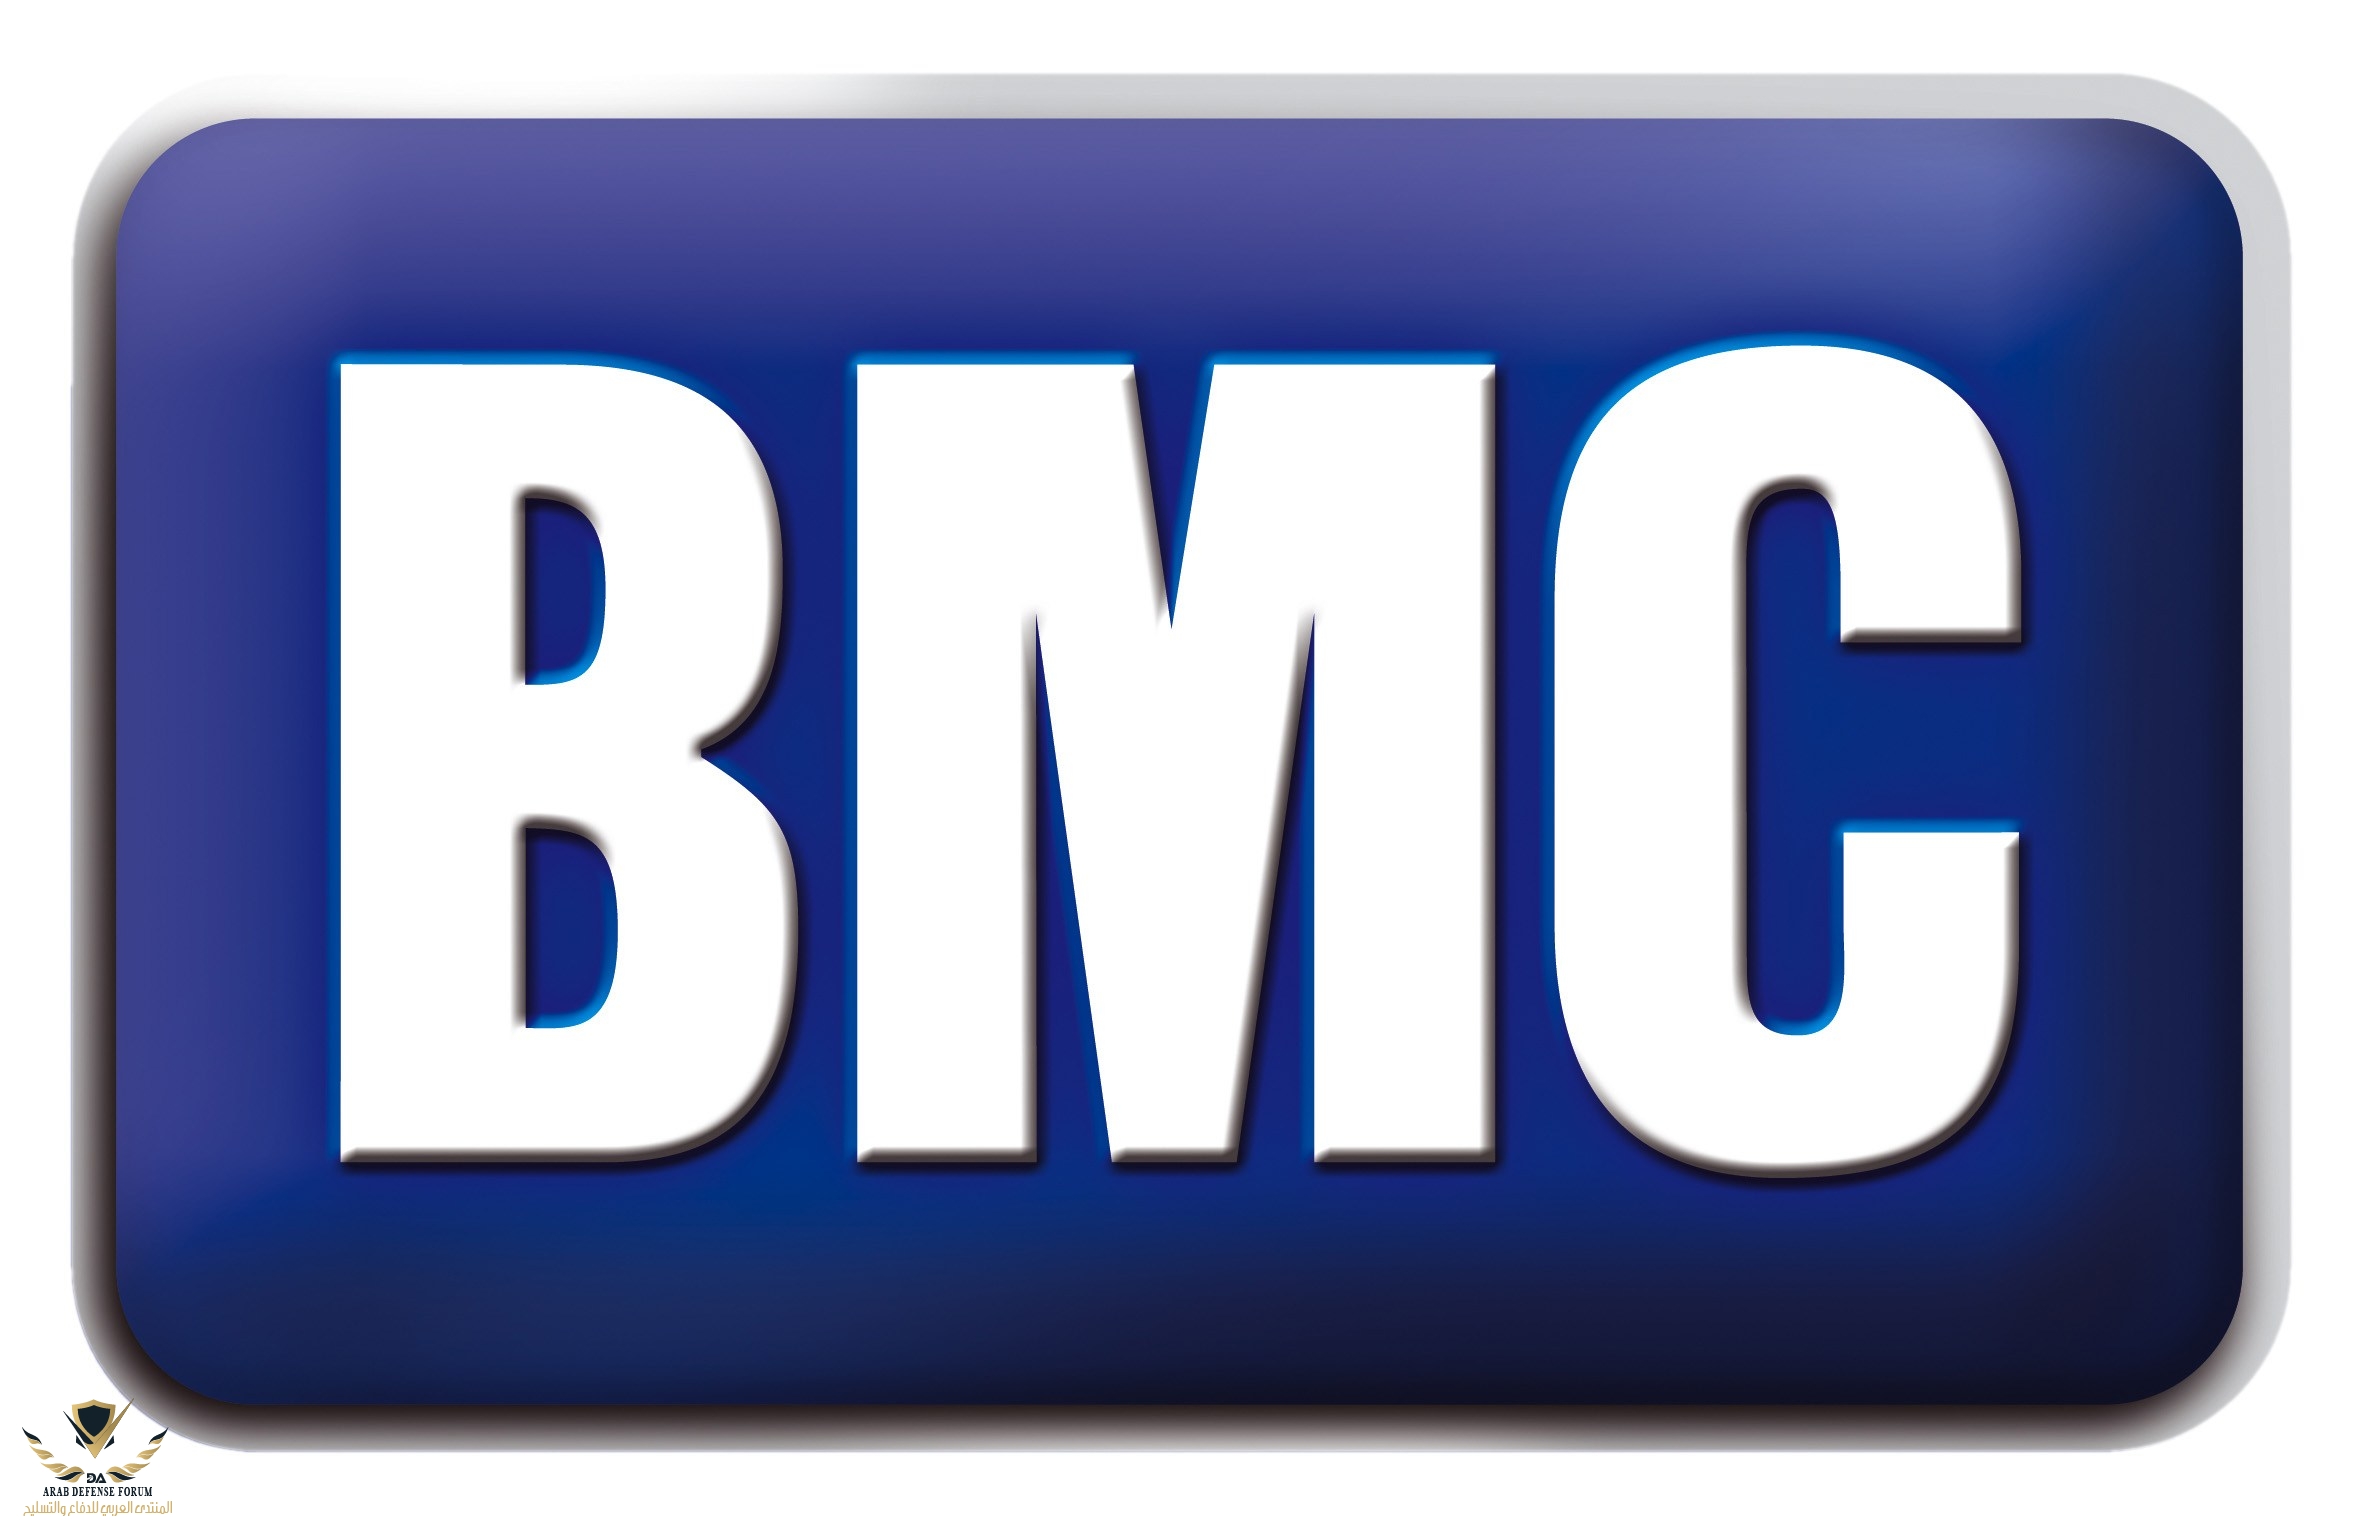 bmc-logo.jpg